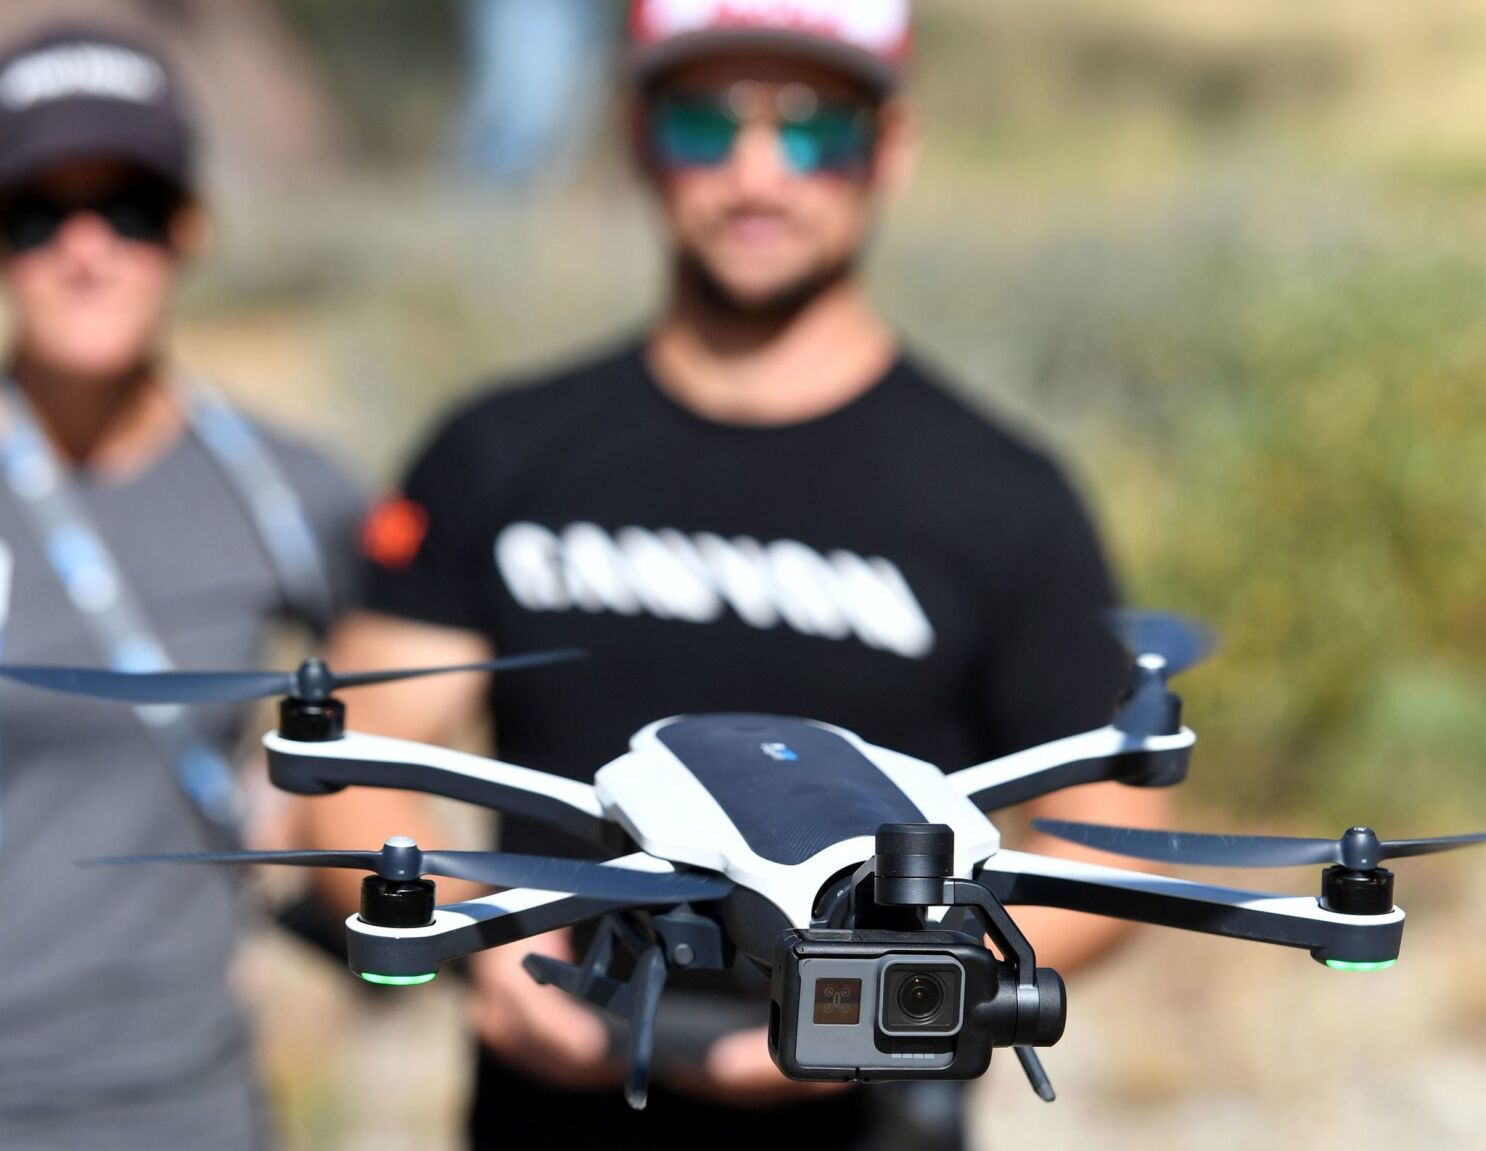 GoPro Karma drones lose power midair; videos show crazy crashes Times